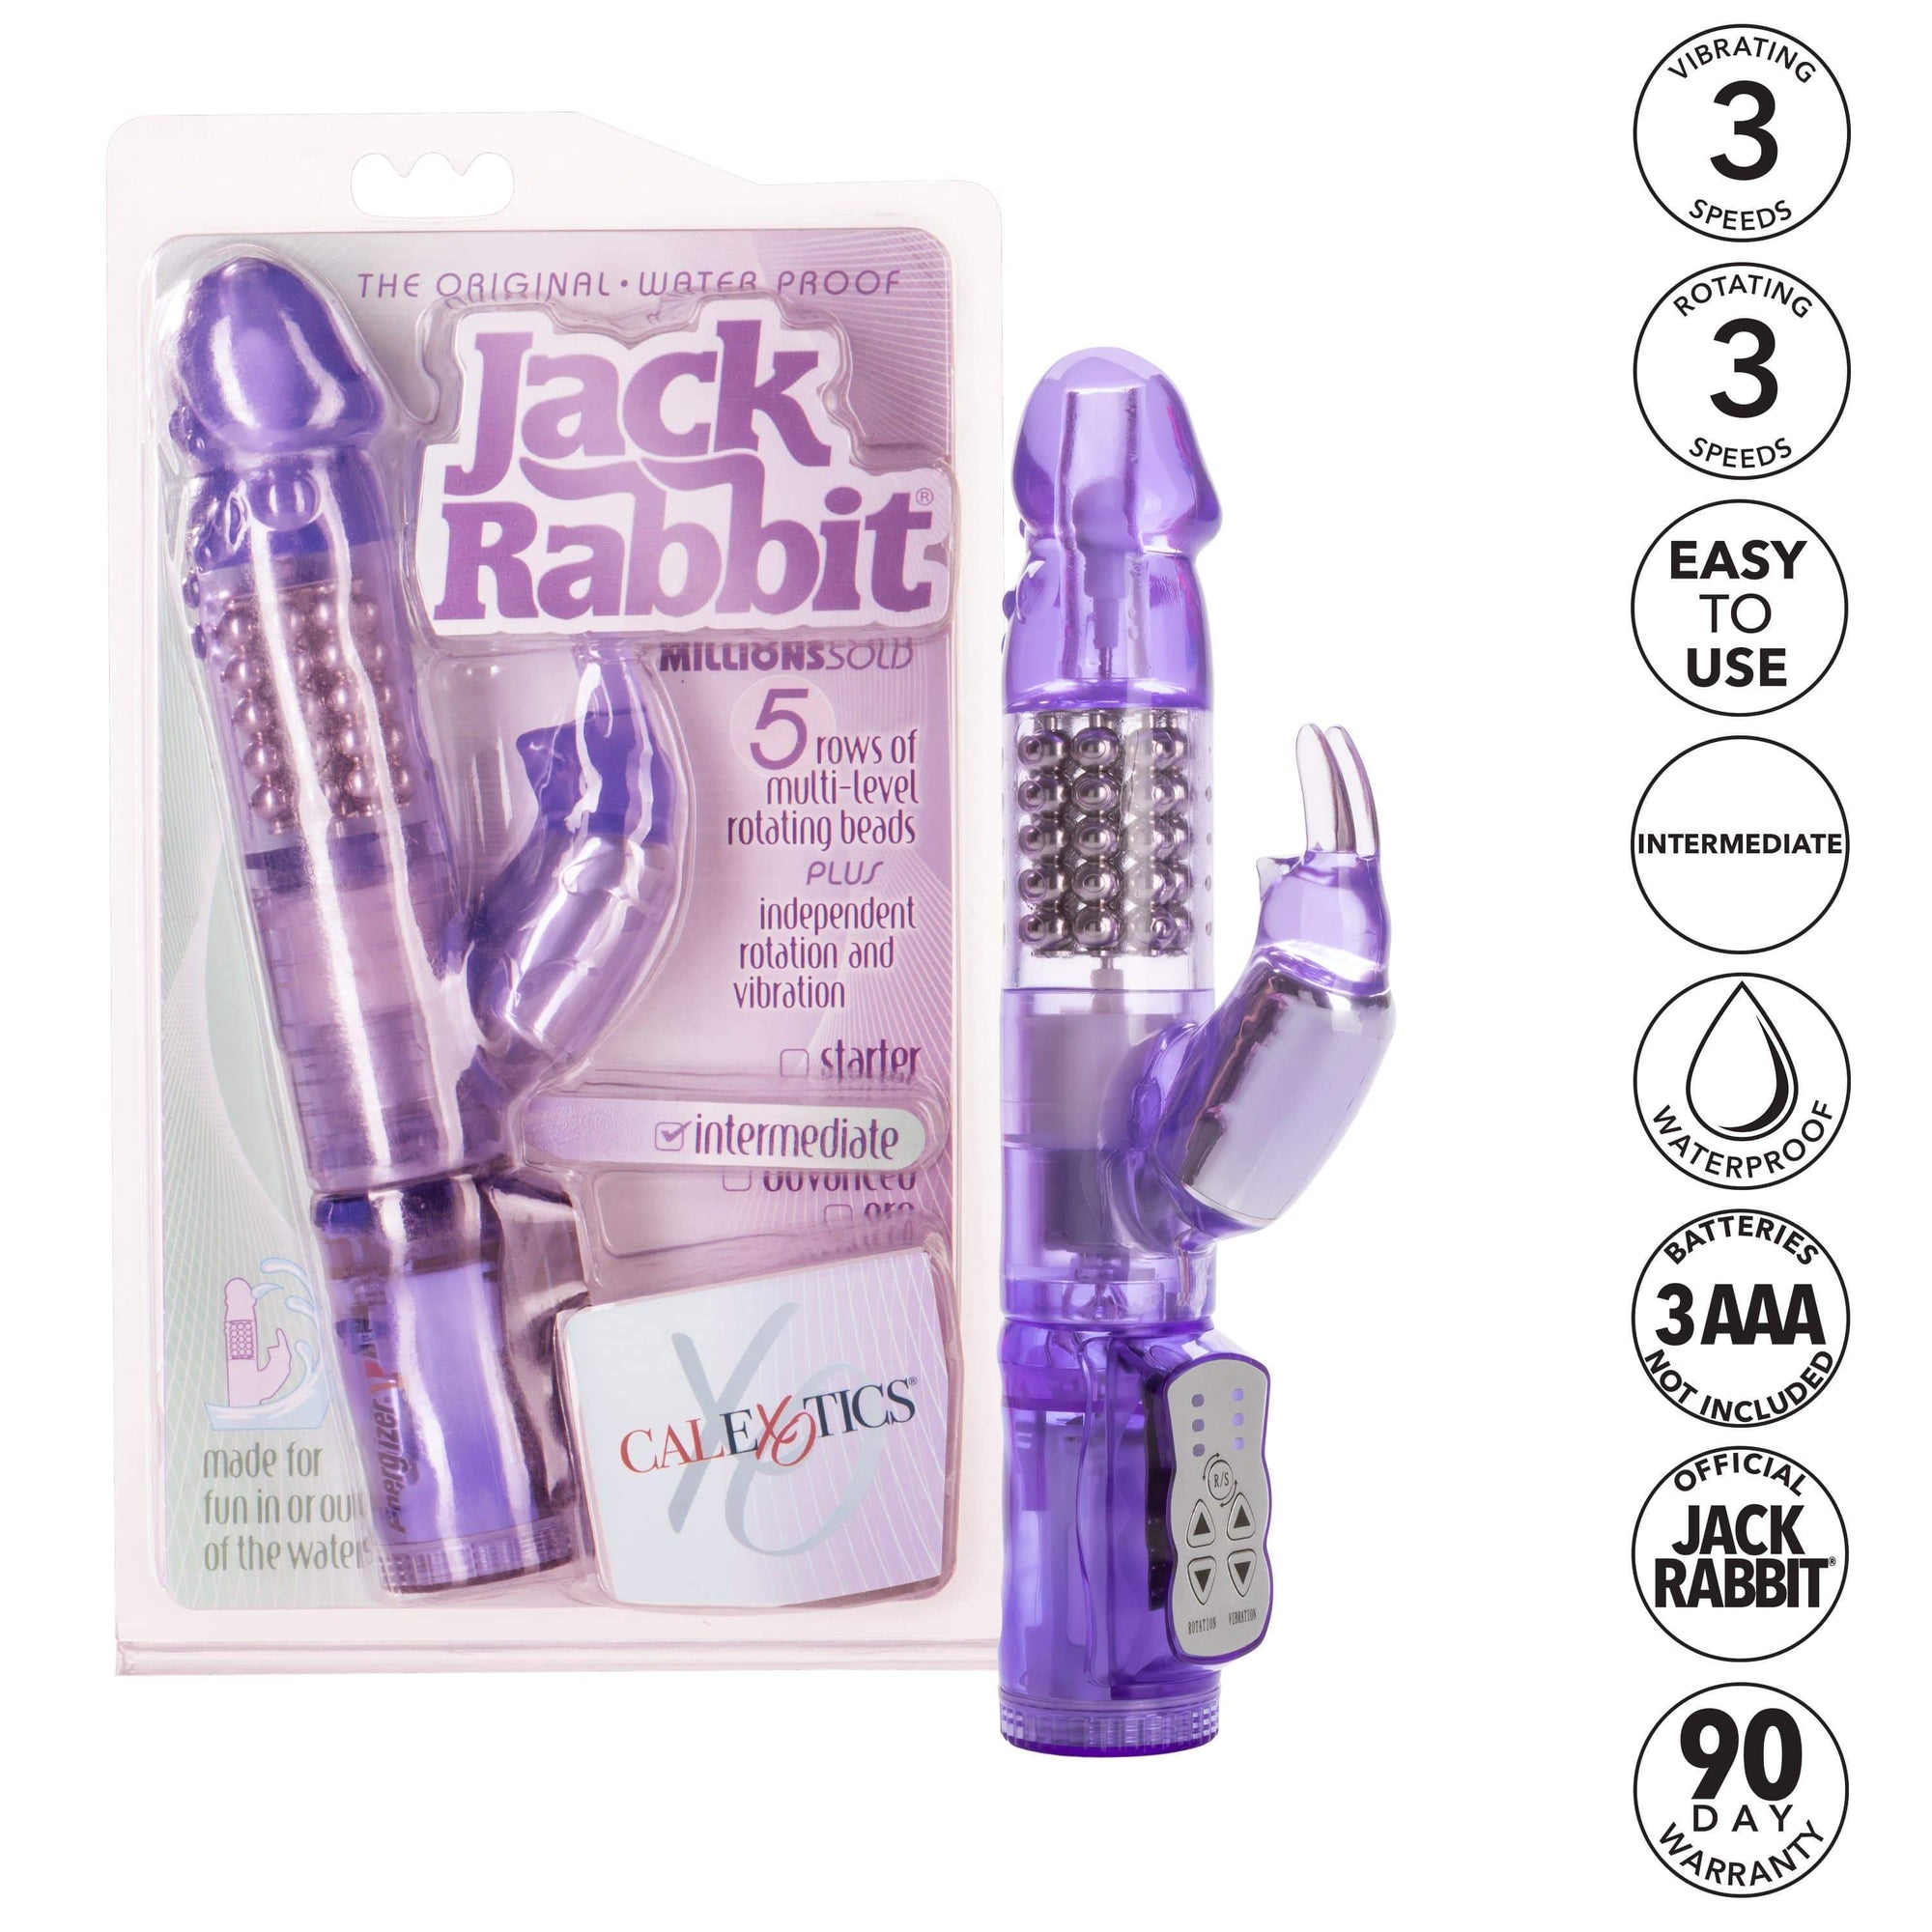 California Exotics - Jack Rabbit Waterproof 5 Rows Jack Rabbit Vibrator (Purple) Rabbit Dildo (Vibration) Non Rechargeable 274257727 CherryAffairs